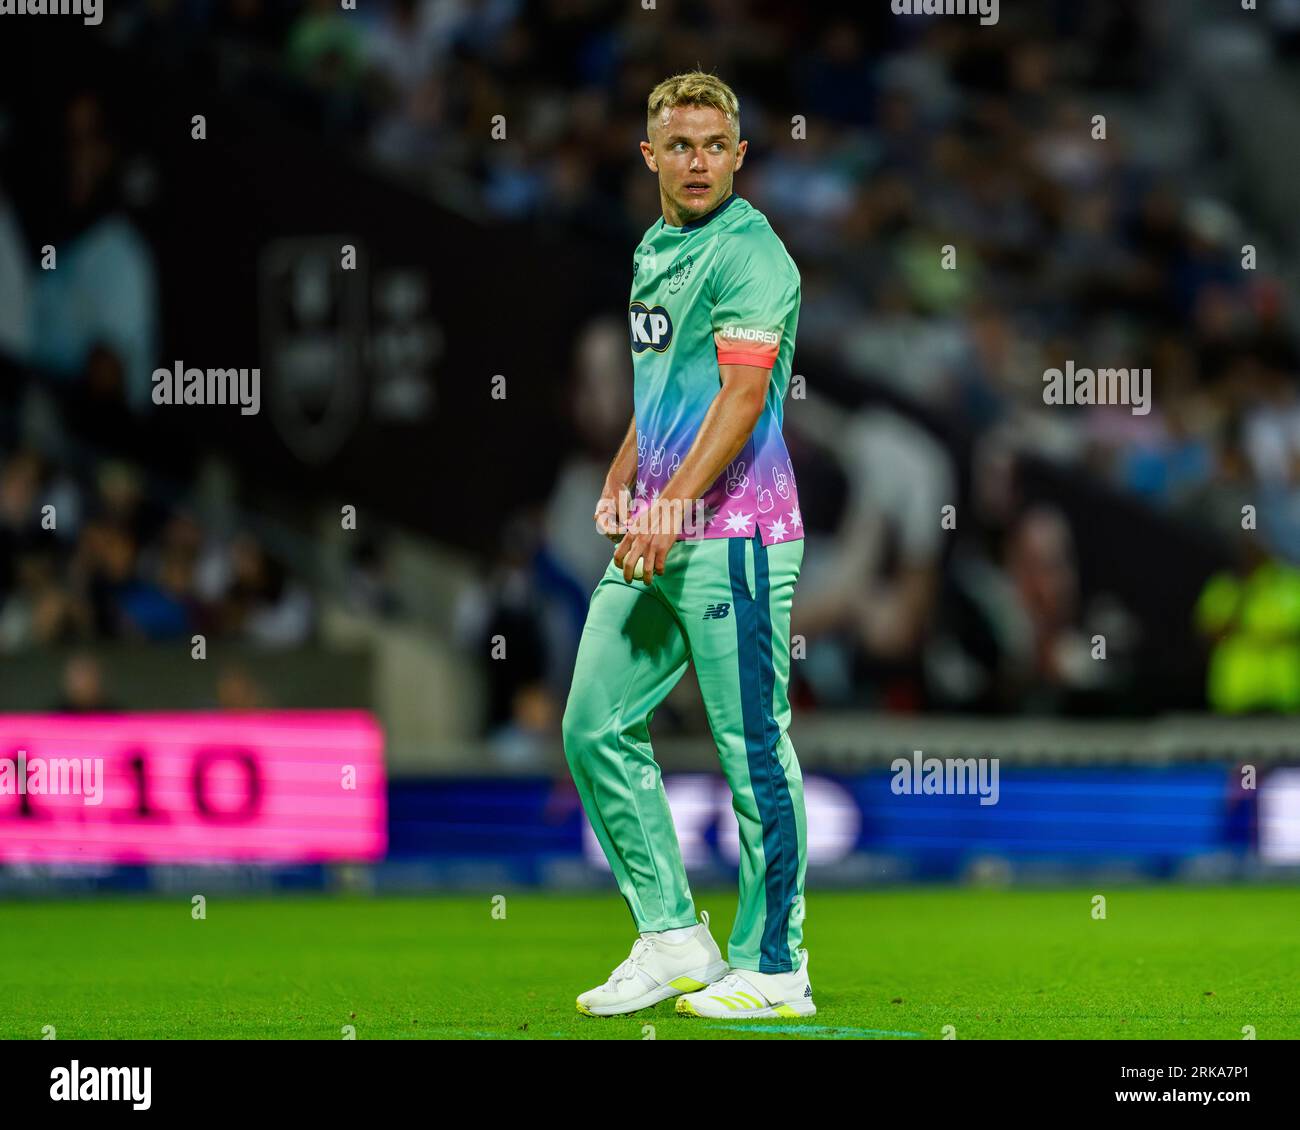 Cricket umpire signaling Six runs Stock Photo - Alamy